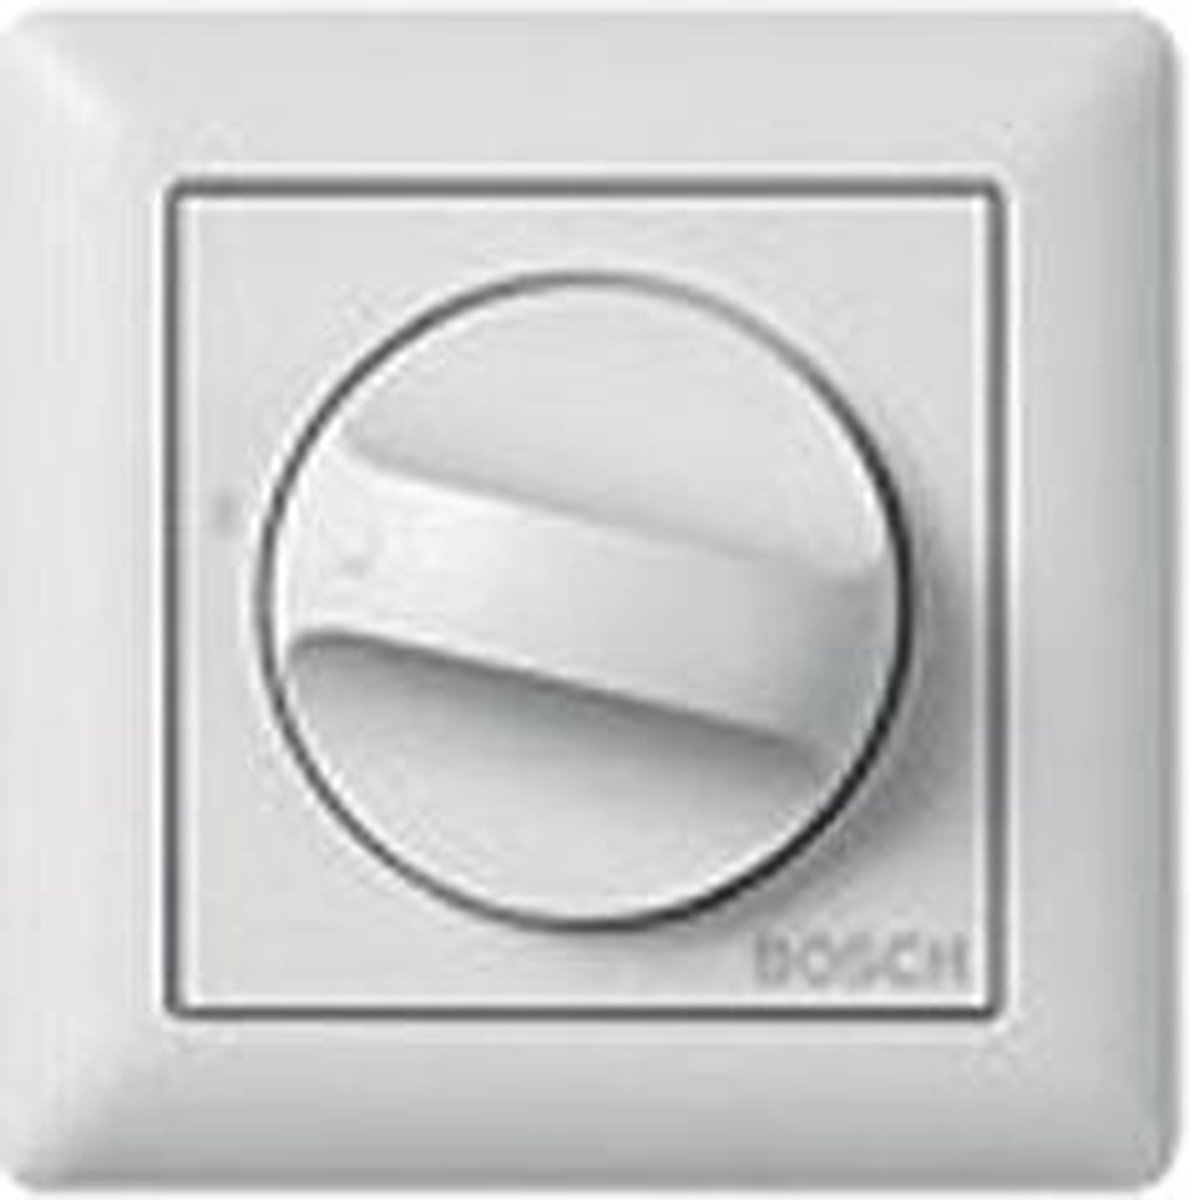 Bosch volumreg u lbc1411 10 36w